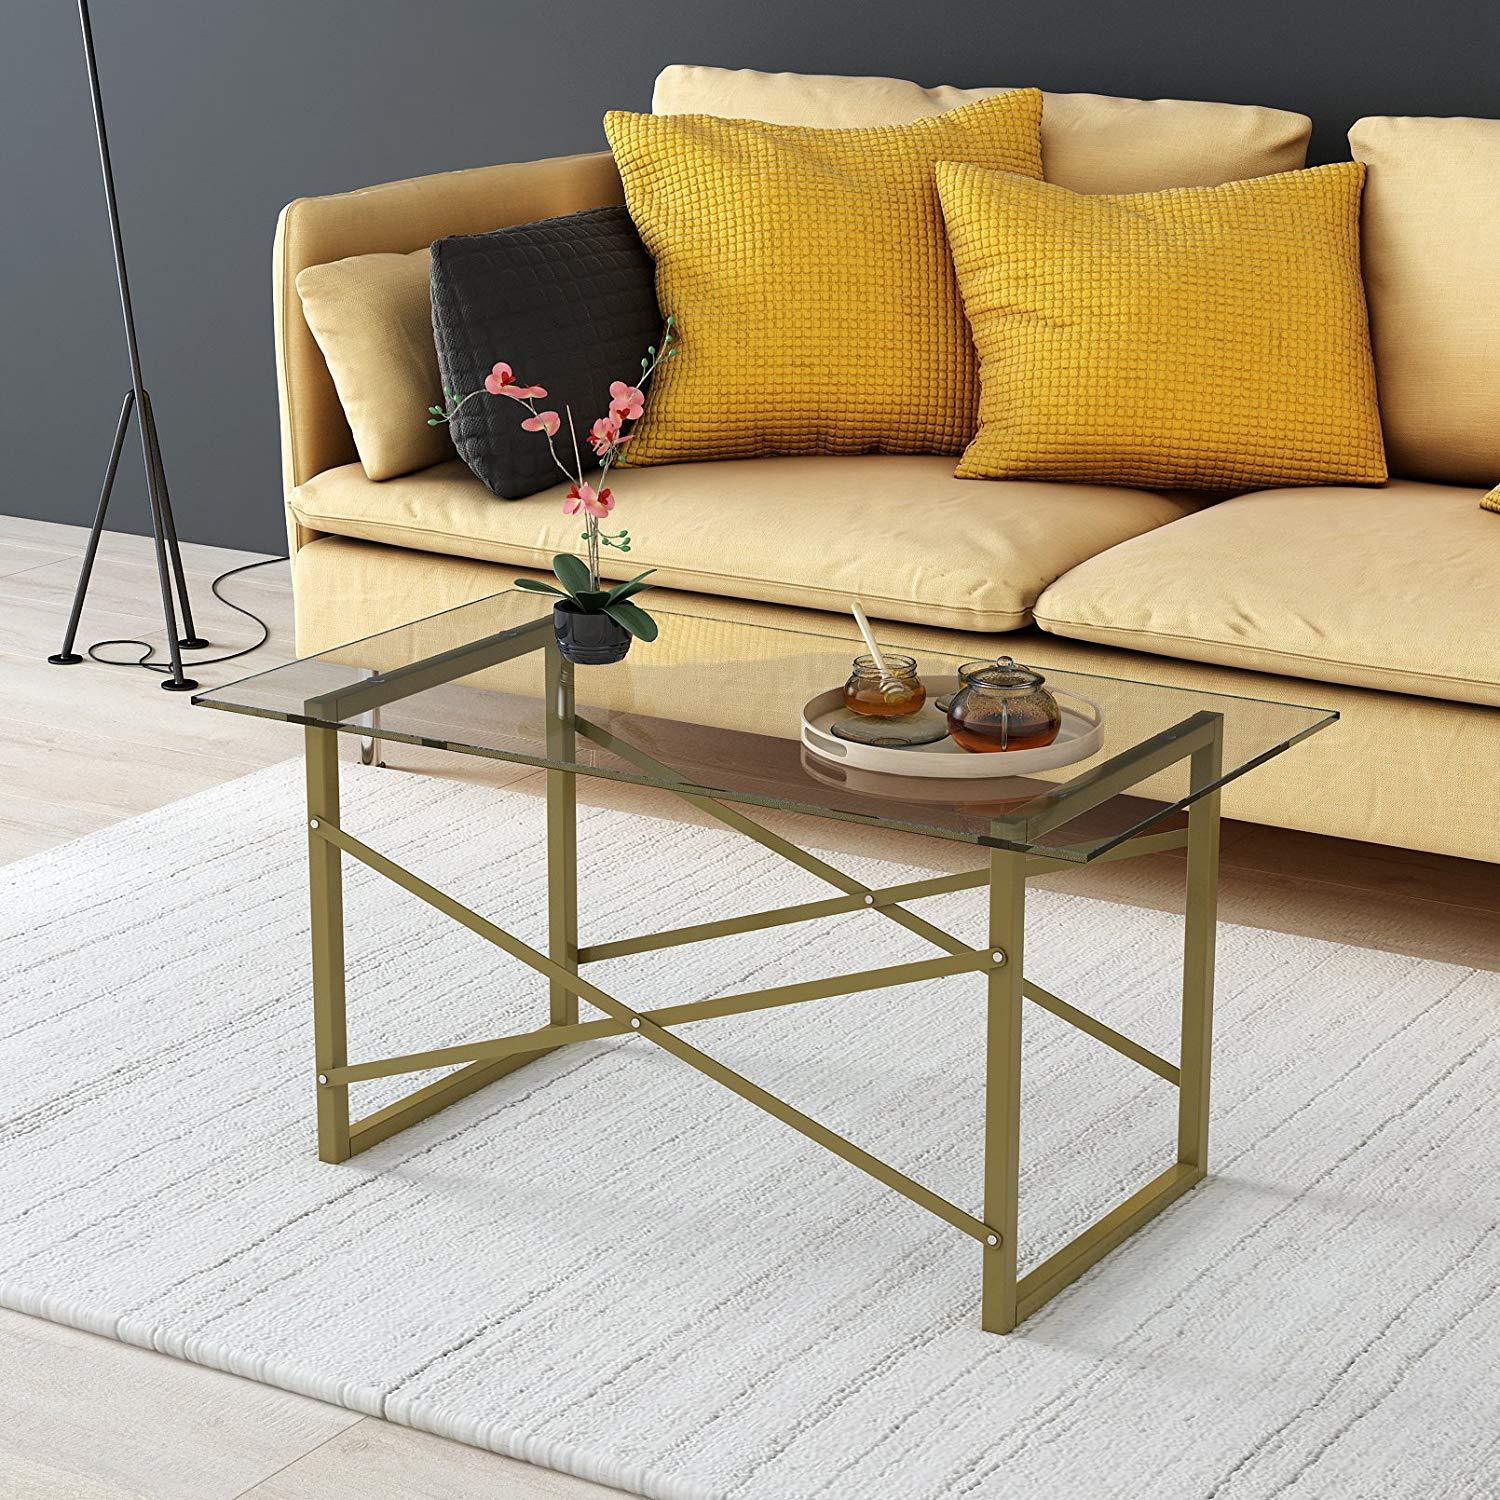 VENUS Modern Living Room Glass Top Coffee Table with Geometric Metal Frame